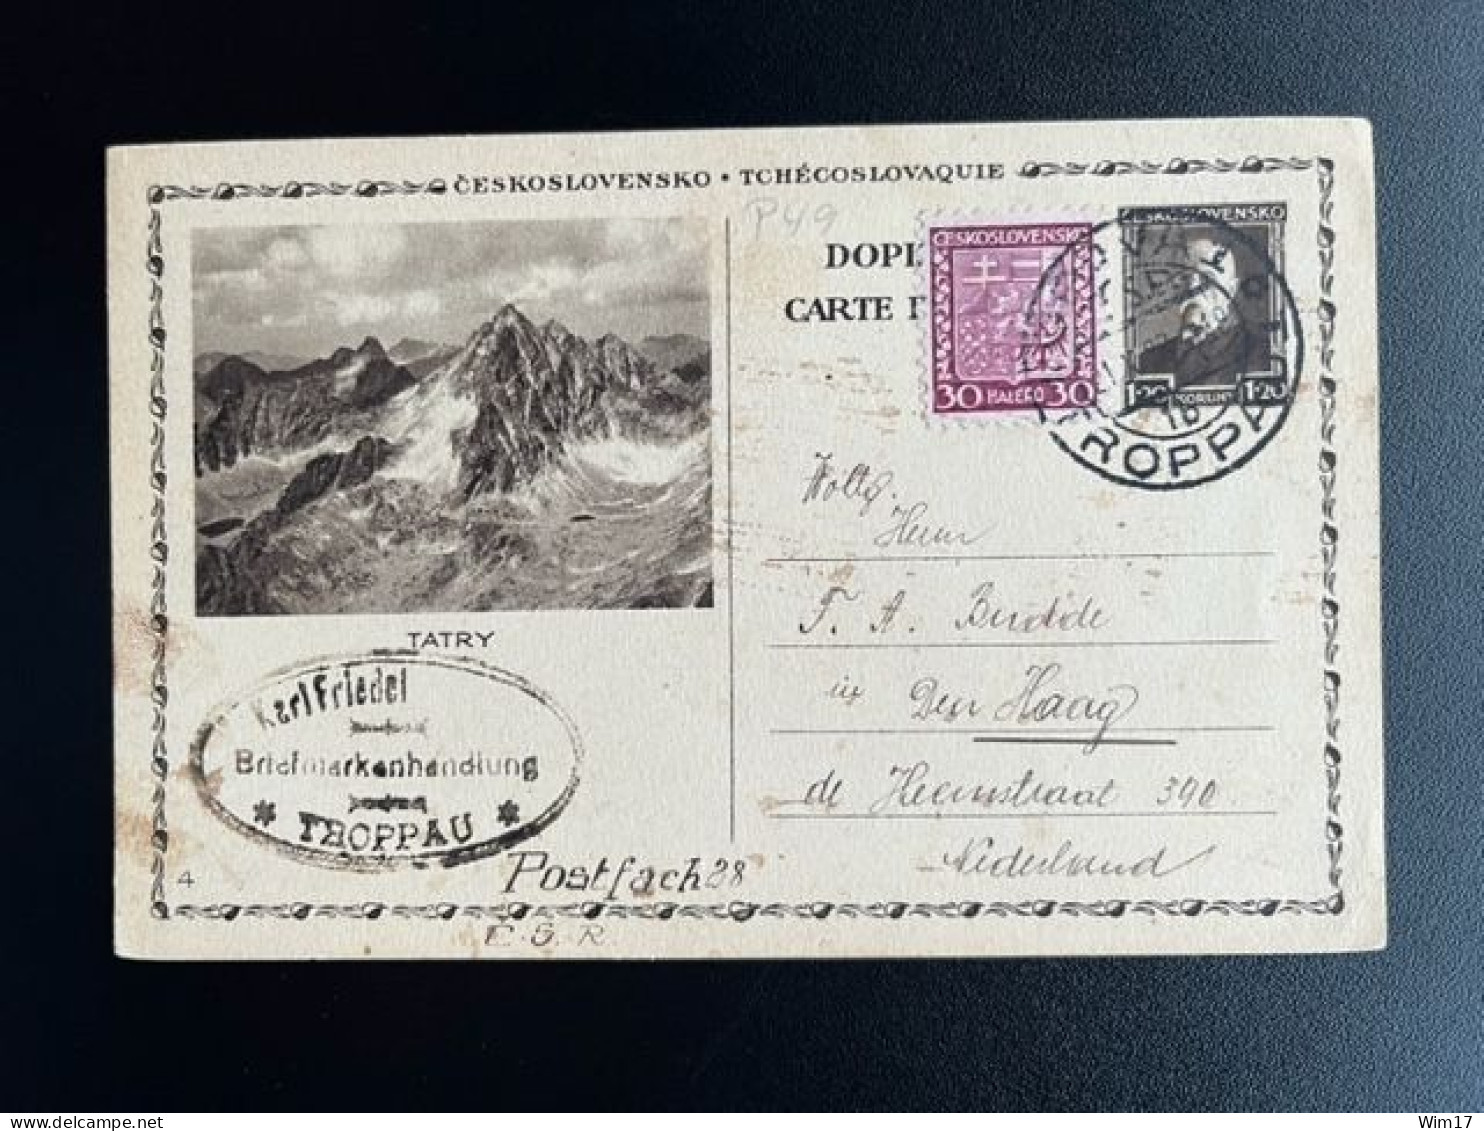 CZECHOSLOVAKIA 1930 POSTCARD OPAVA TROPPAU TO 'S GRAVENHAGE 21-10-1930 TSJECHOSLOWAKIJE CESKOSLOVENSKO - Postcards